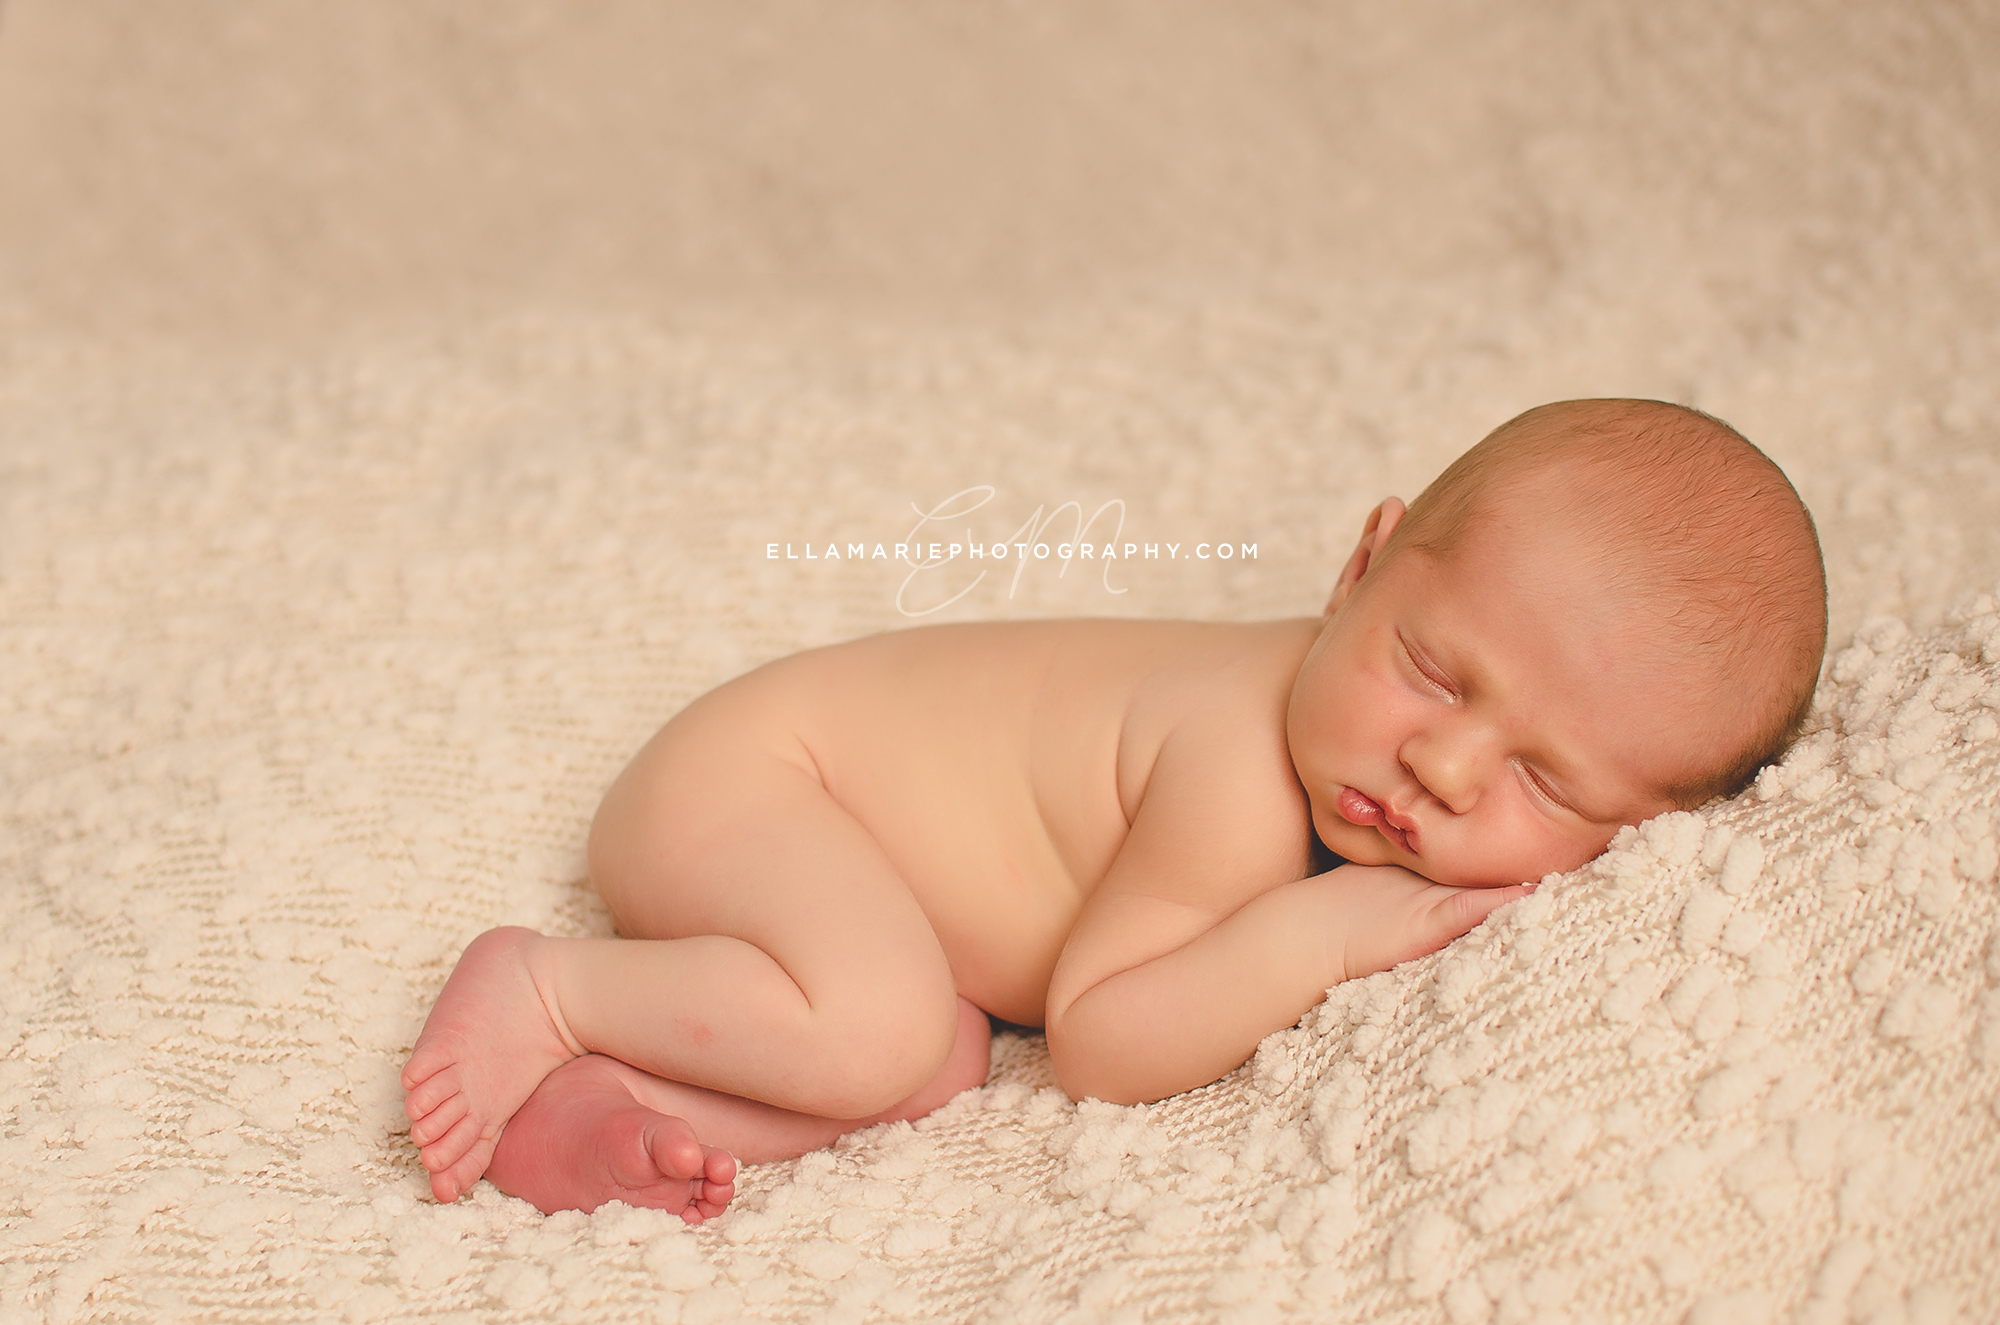 EllaMariePhotography_newborn_maternity_baby_infant_Baden_ON_New_Hamburg_Stratford_Waterloo_Kitchener_Guelph_Cambridge_Listowel_photographer_photography_16.jpg